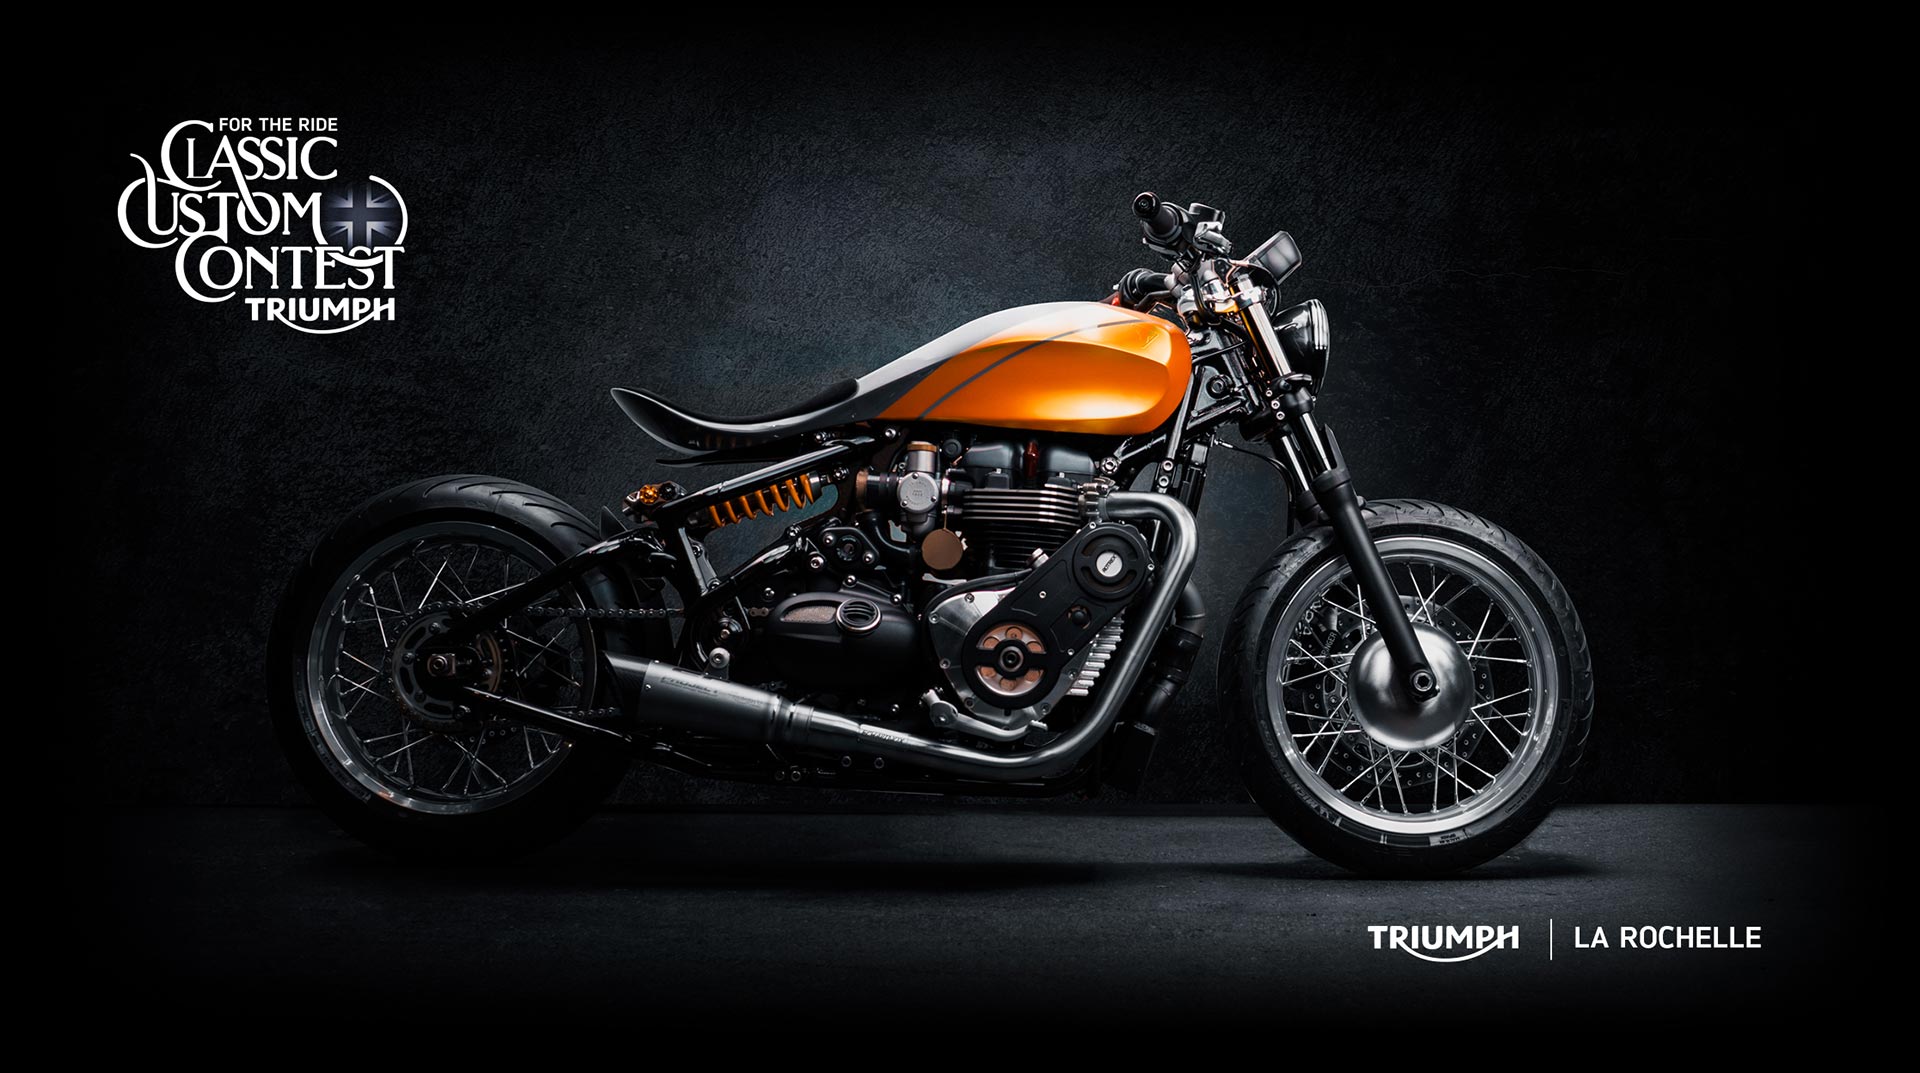 Triumph-custom-classic-contest-DEALER-ROCHELLE-1920x1080